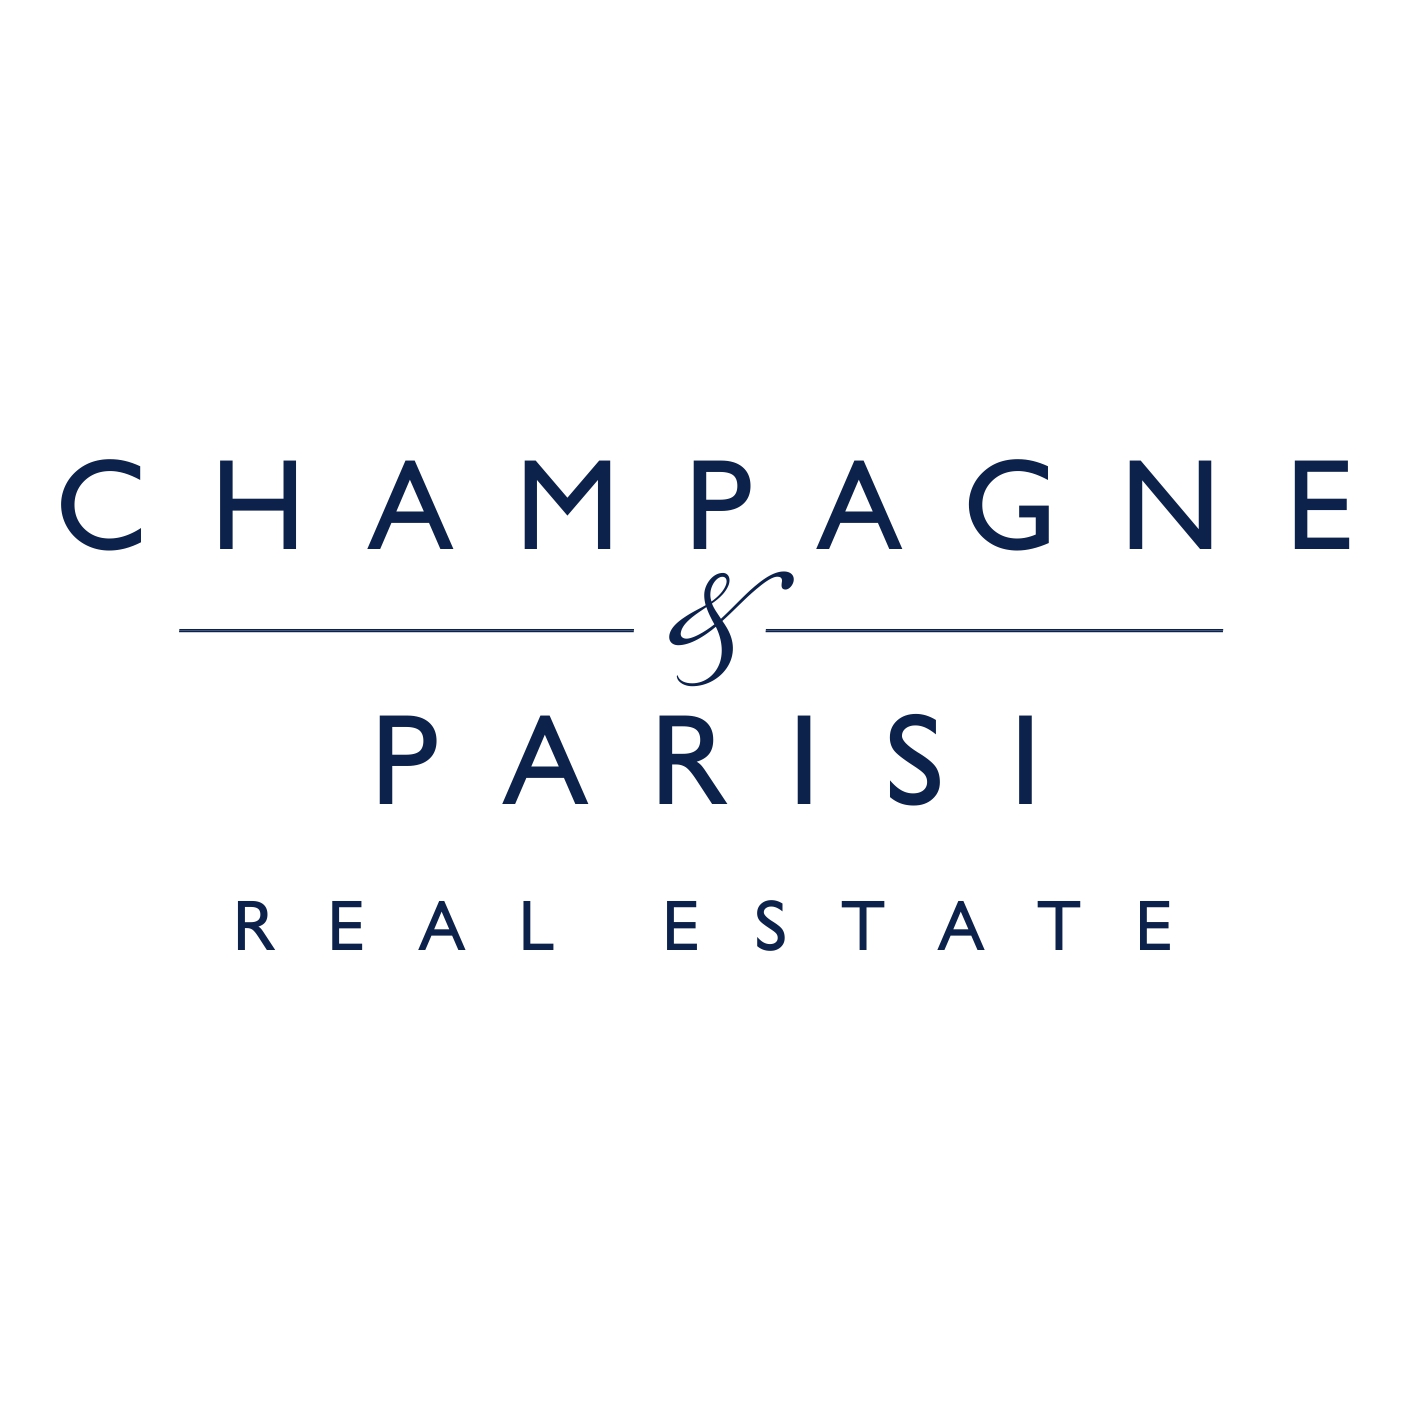 Champagne & Parisi Real Estate in Boca Raton, Florida